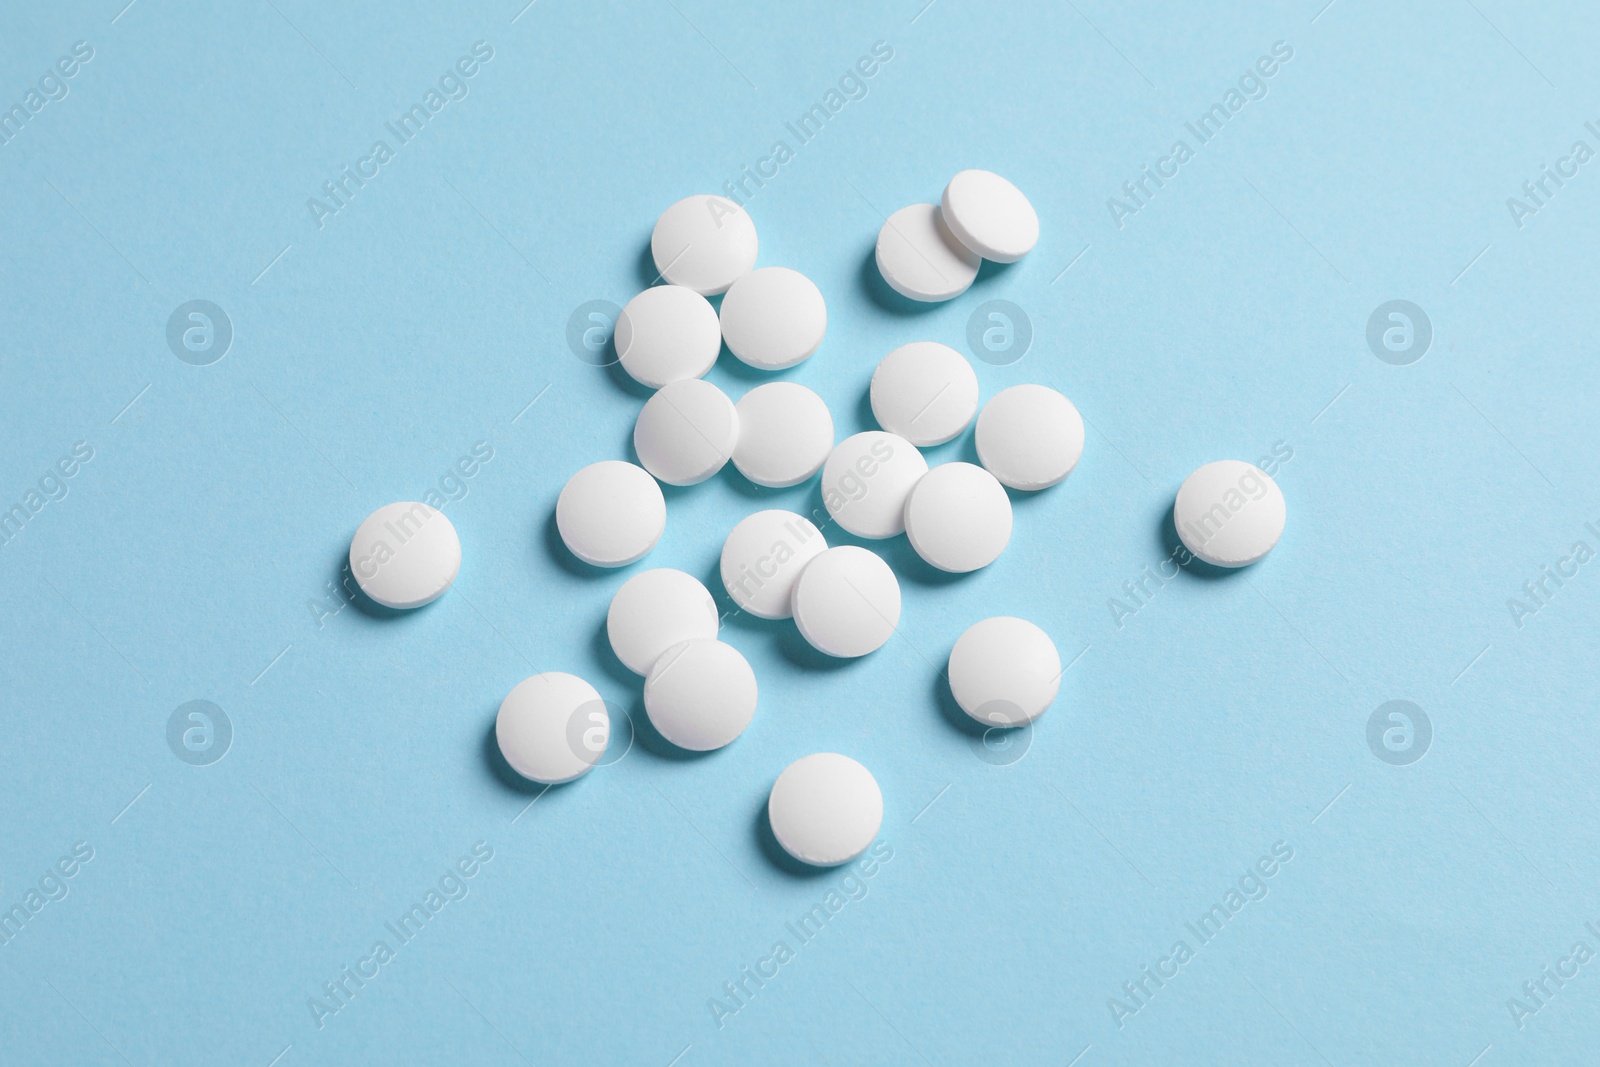 Photo of Many white pills on light blue background, flat lay